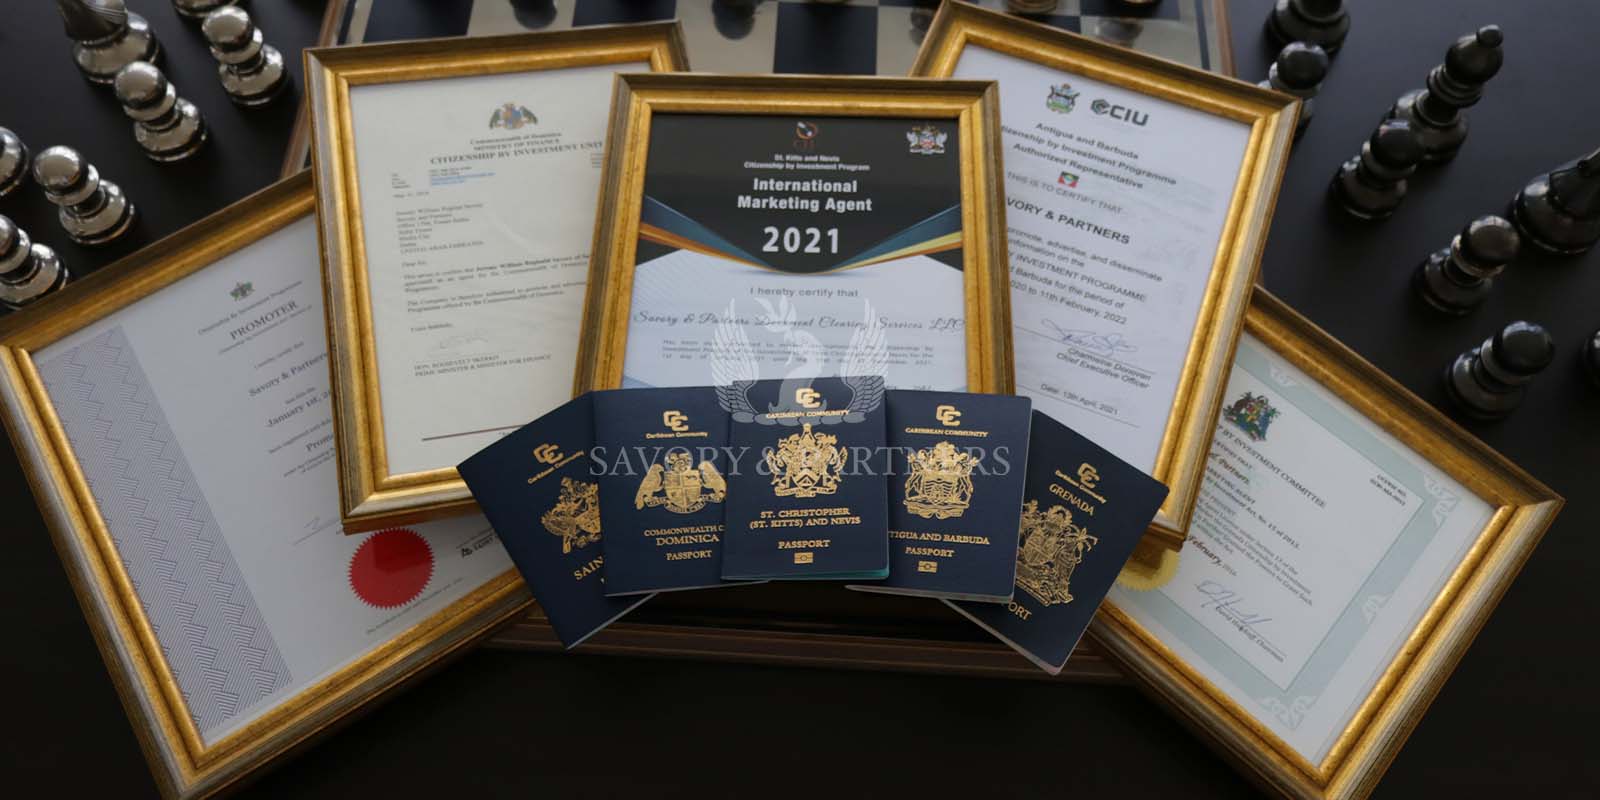 Caribbean passports at Savory & Partners office in Dubai, UAE.